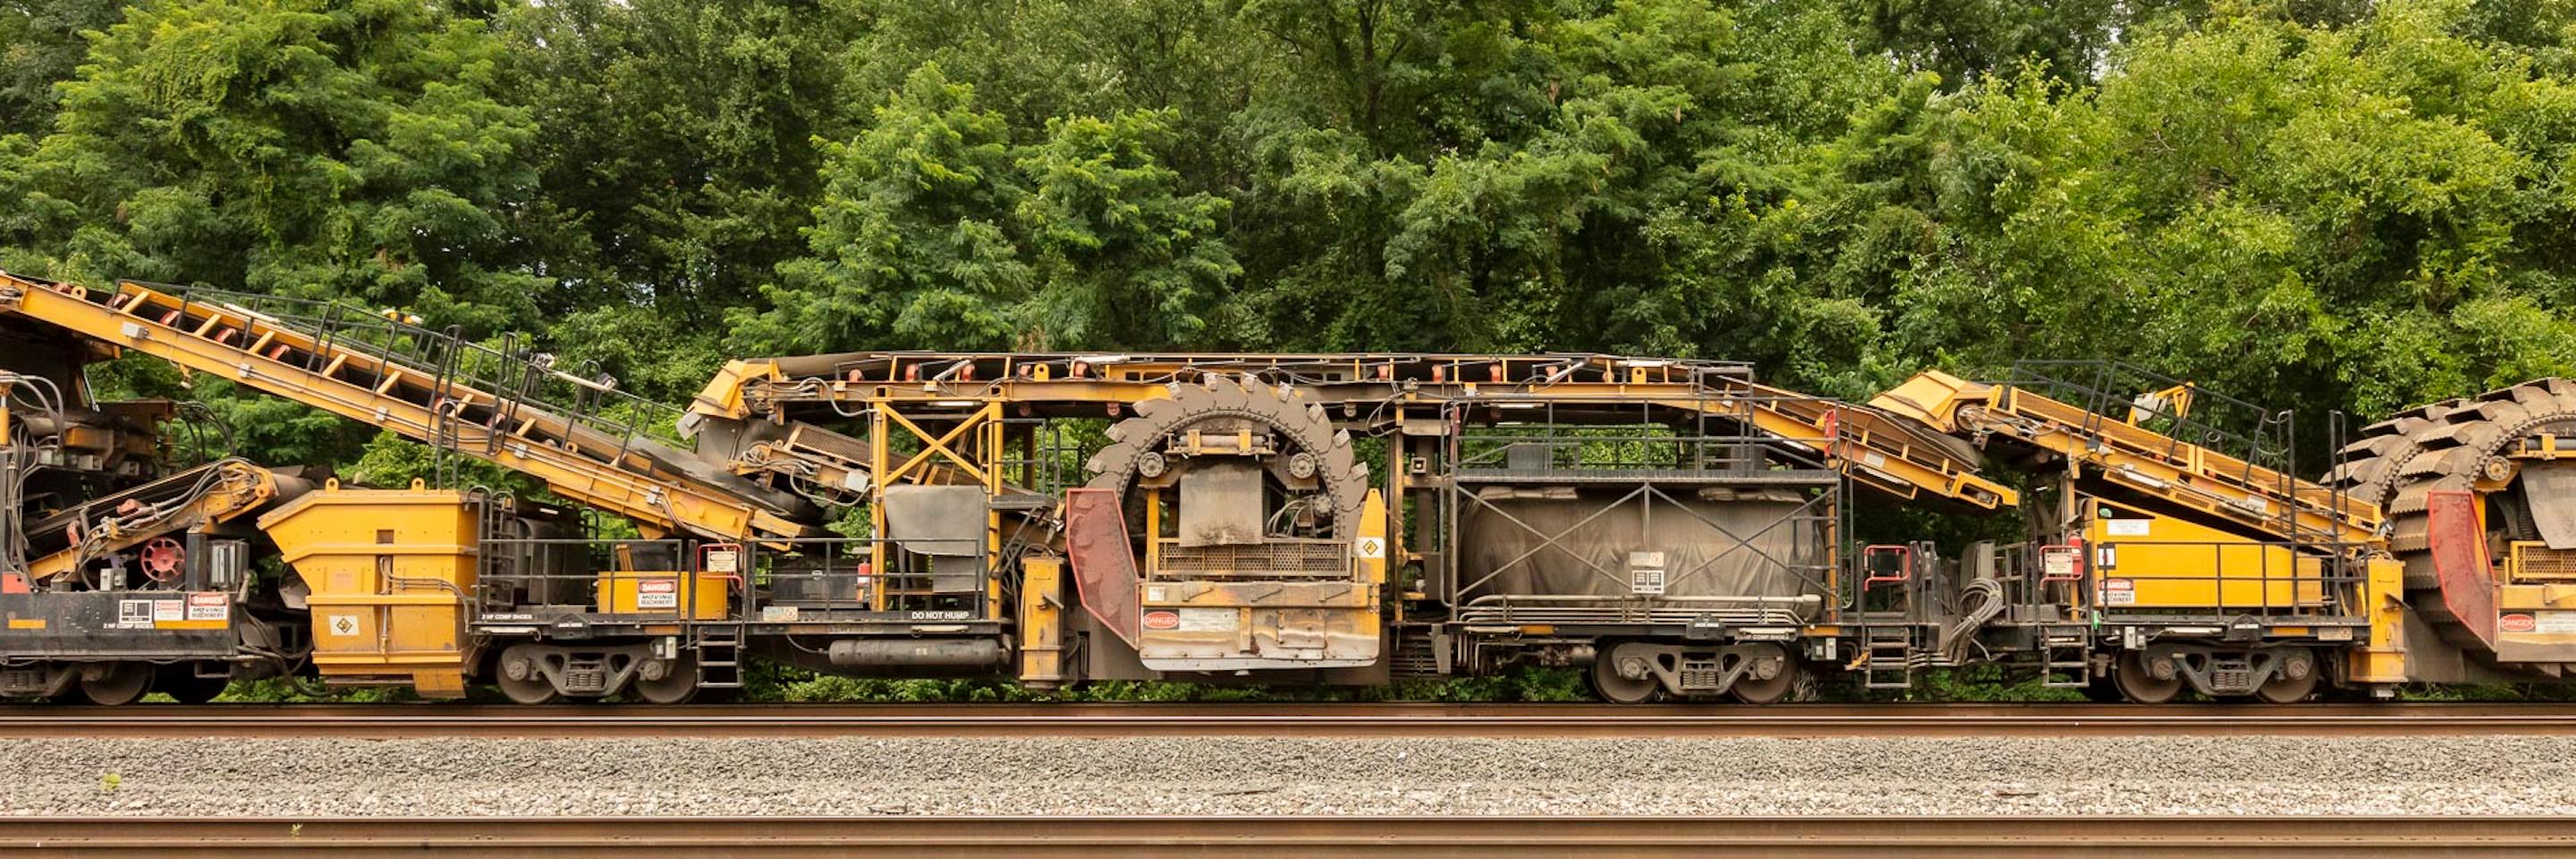 Stephen Mallon Color Photograph - Freight Train Contemporary Photograph, "Undercutter" 20"x60" C-Print